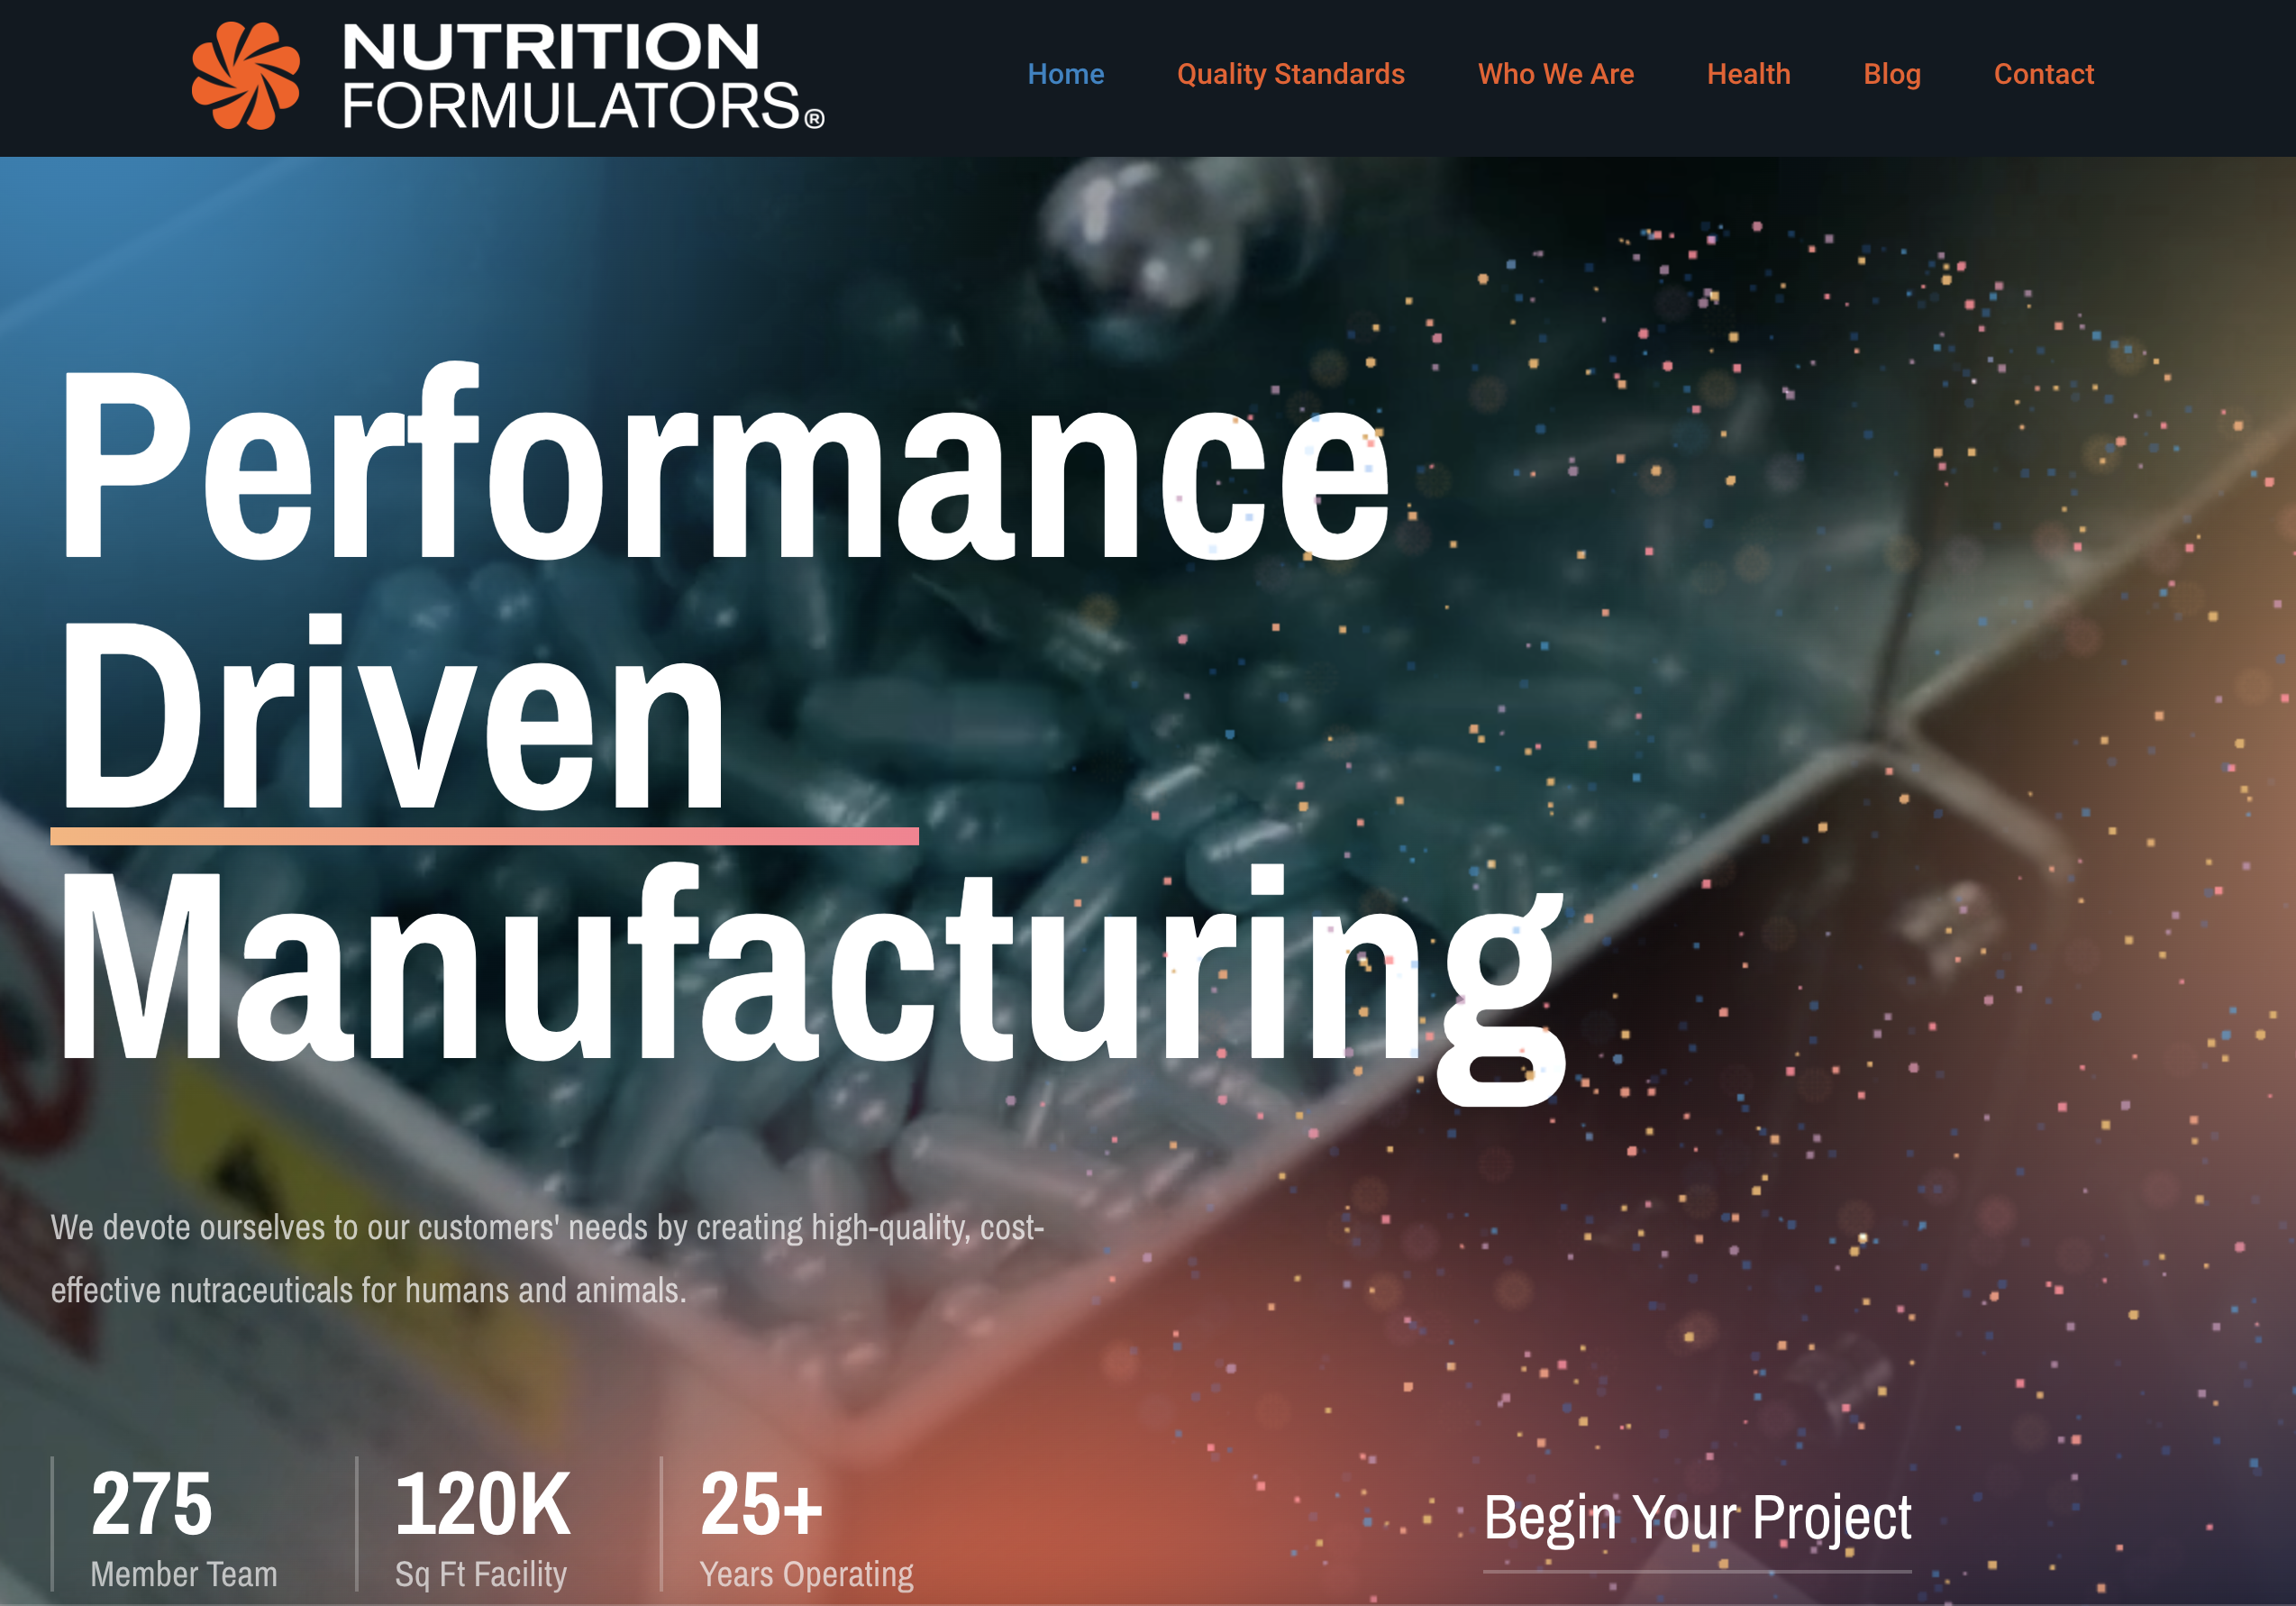 Nutrition Formulators website by Imperium Marketing Solutions